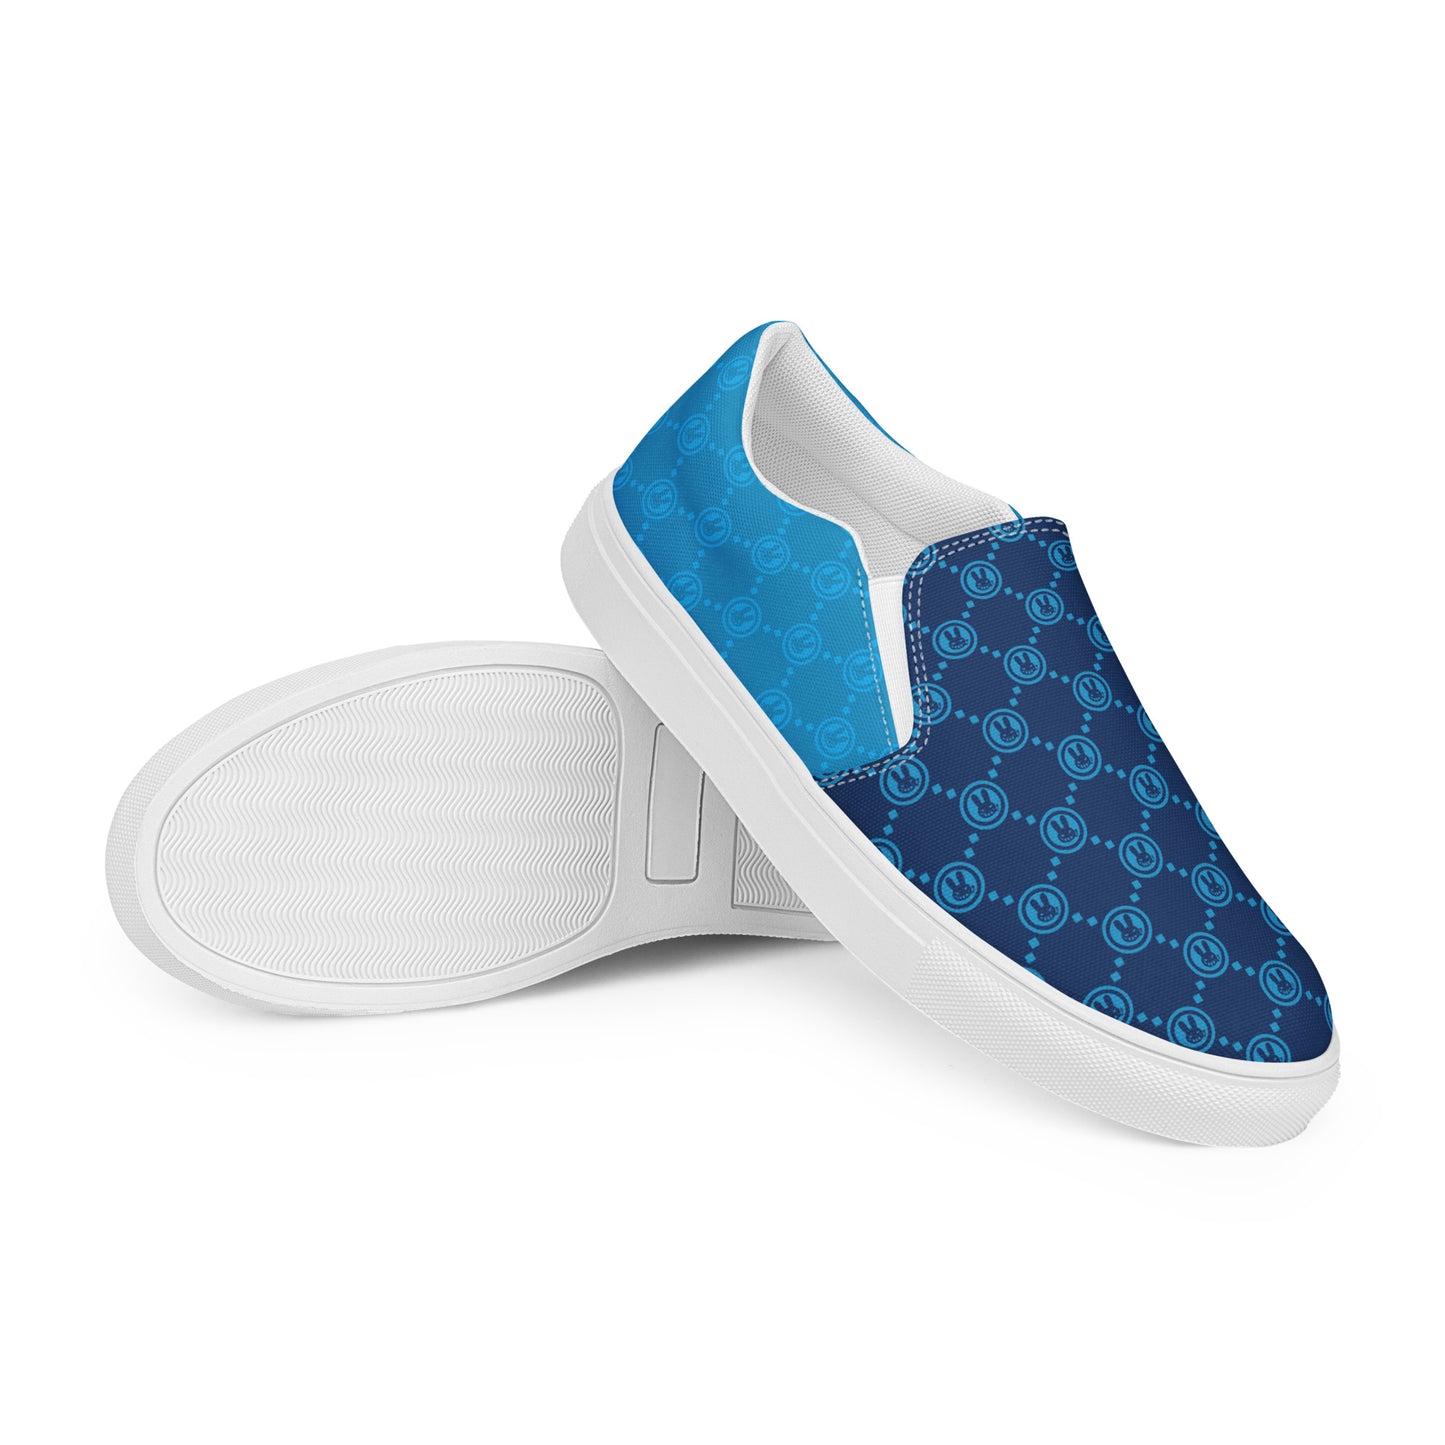 Dr. Zodiak's Moonrock - Blue Slip-On Canvas Shoes